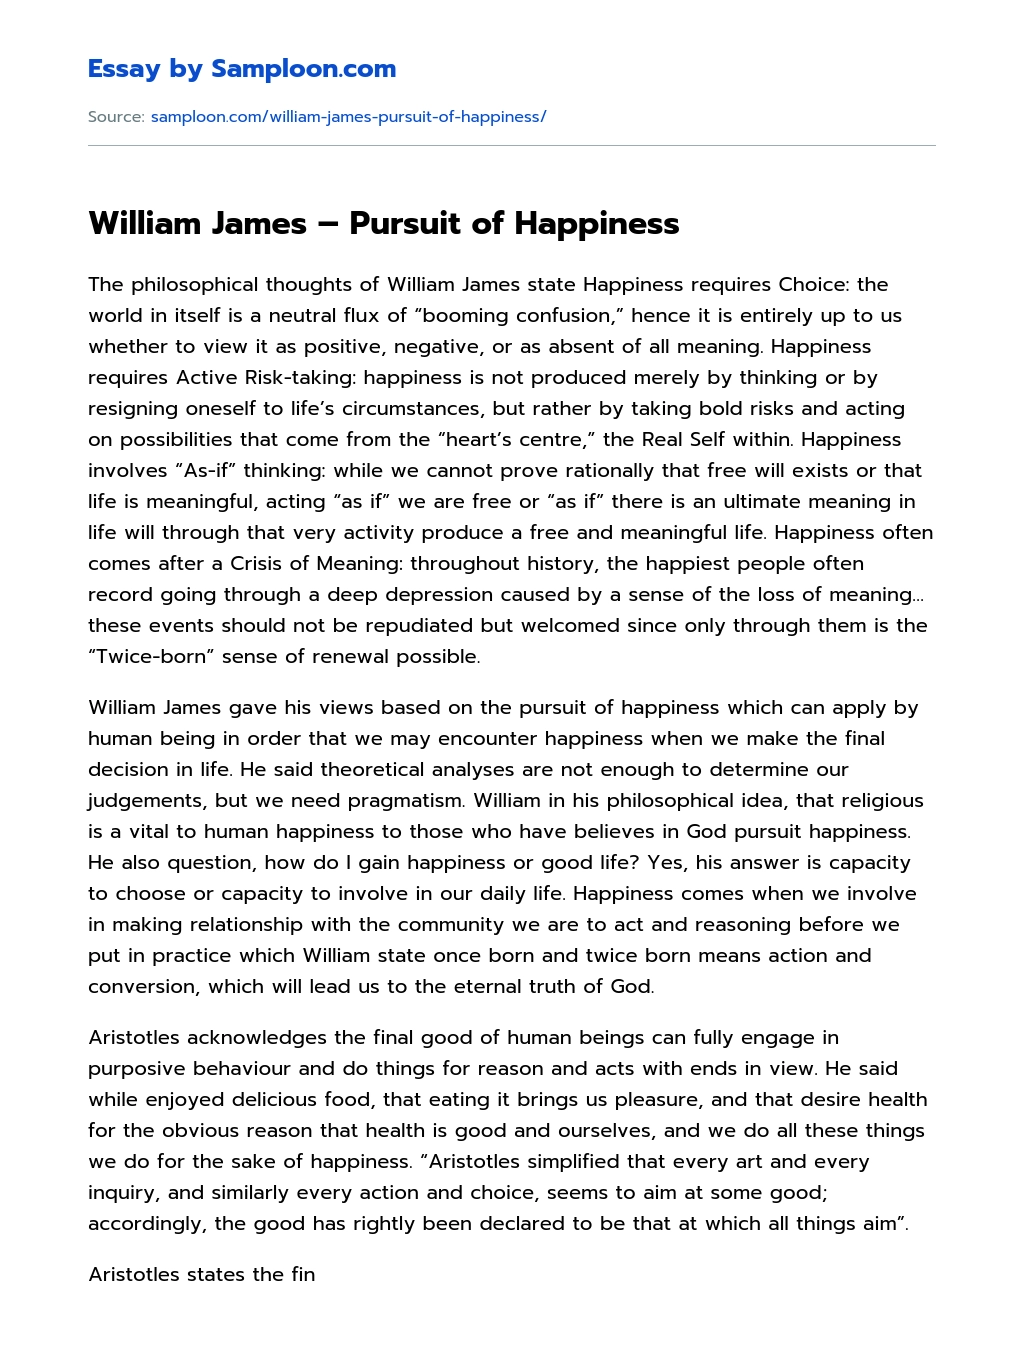 William James – Pursuit of Happiness essay